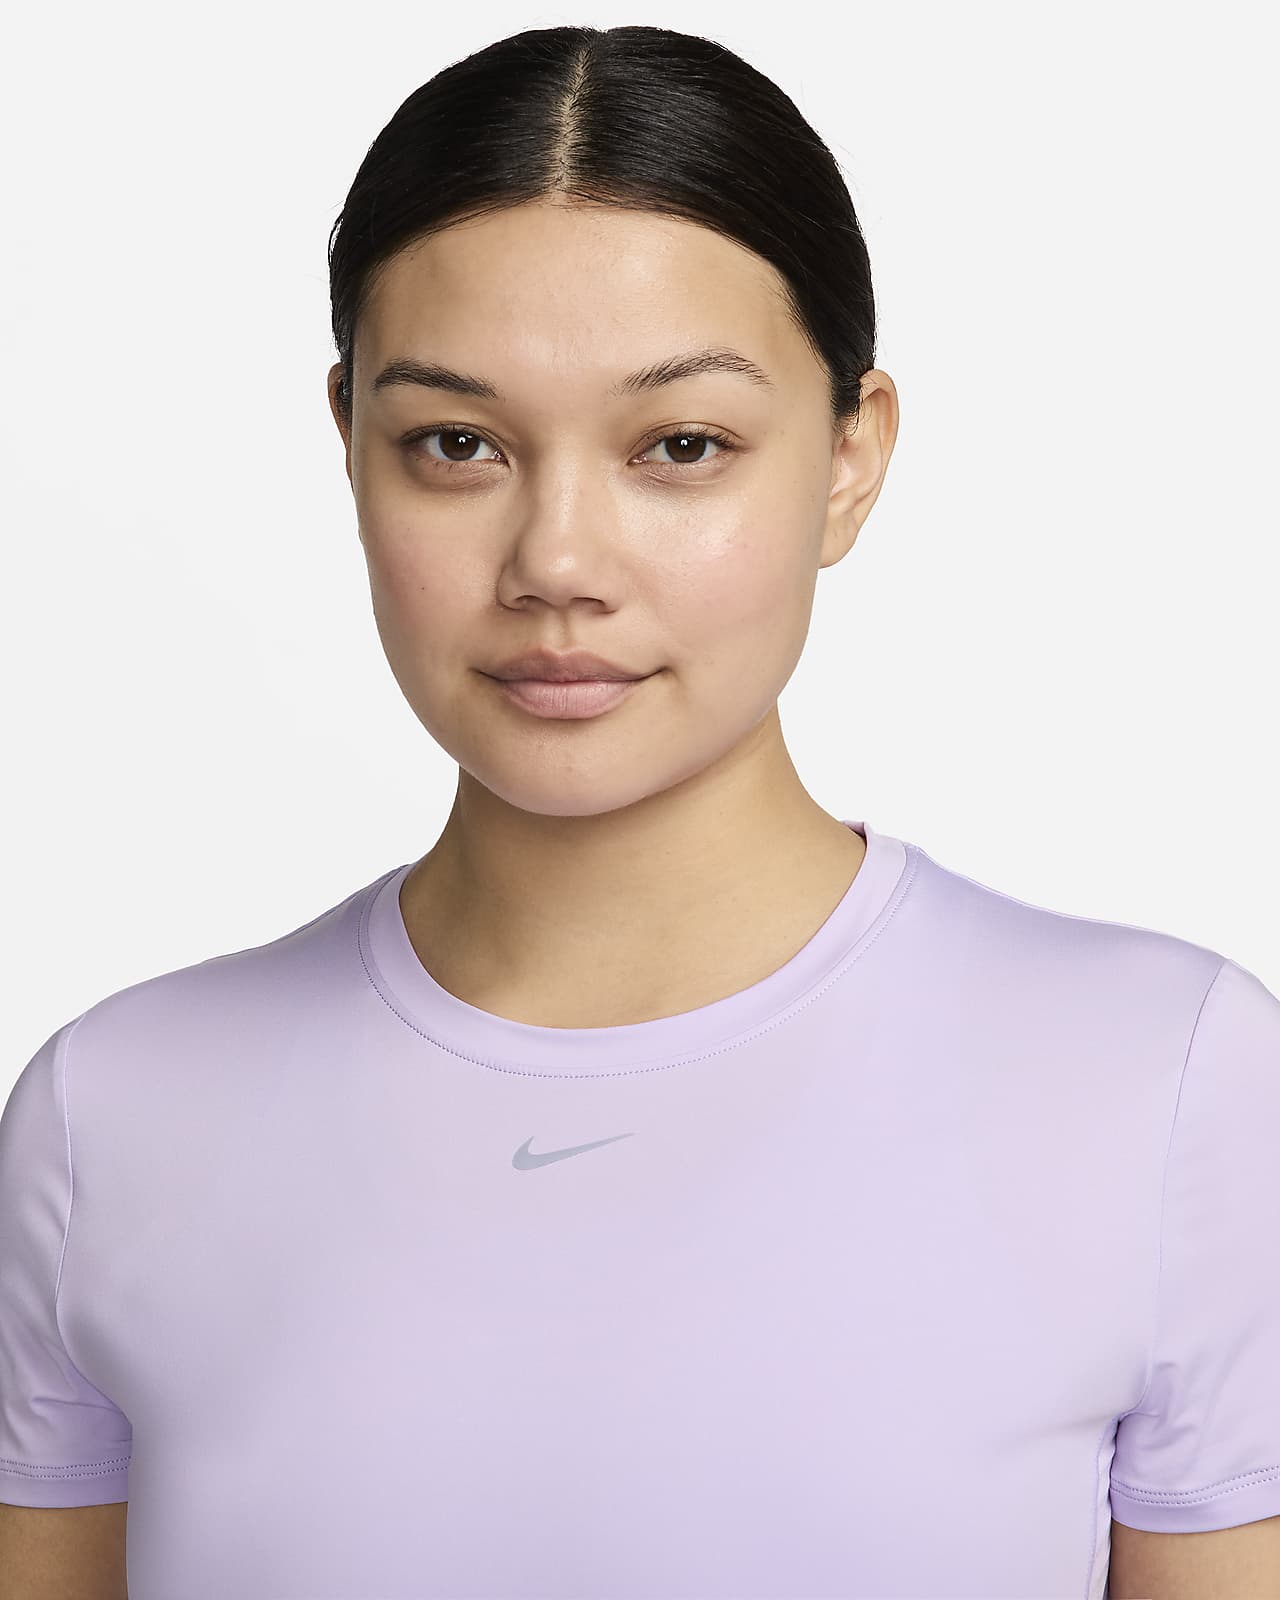 Nike Women's Dri-FIT Short Sleeve Yoga Training Top